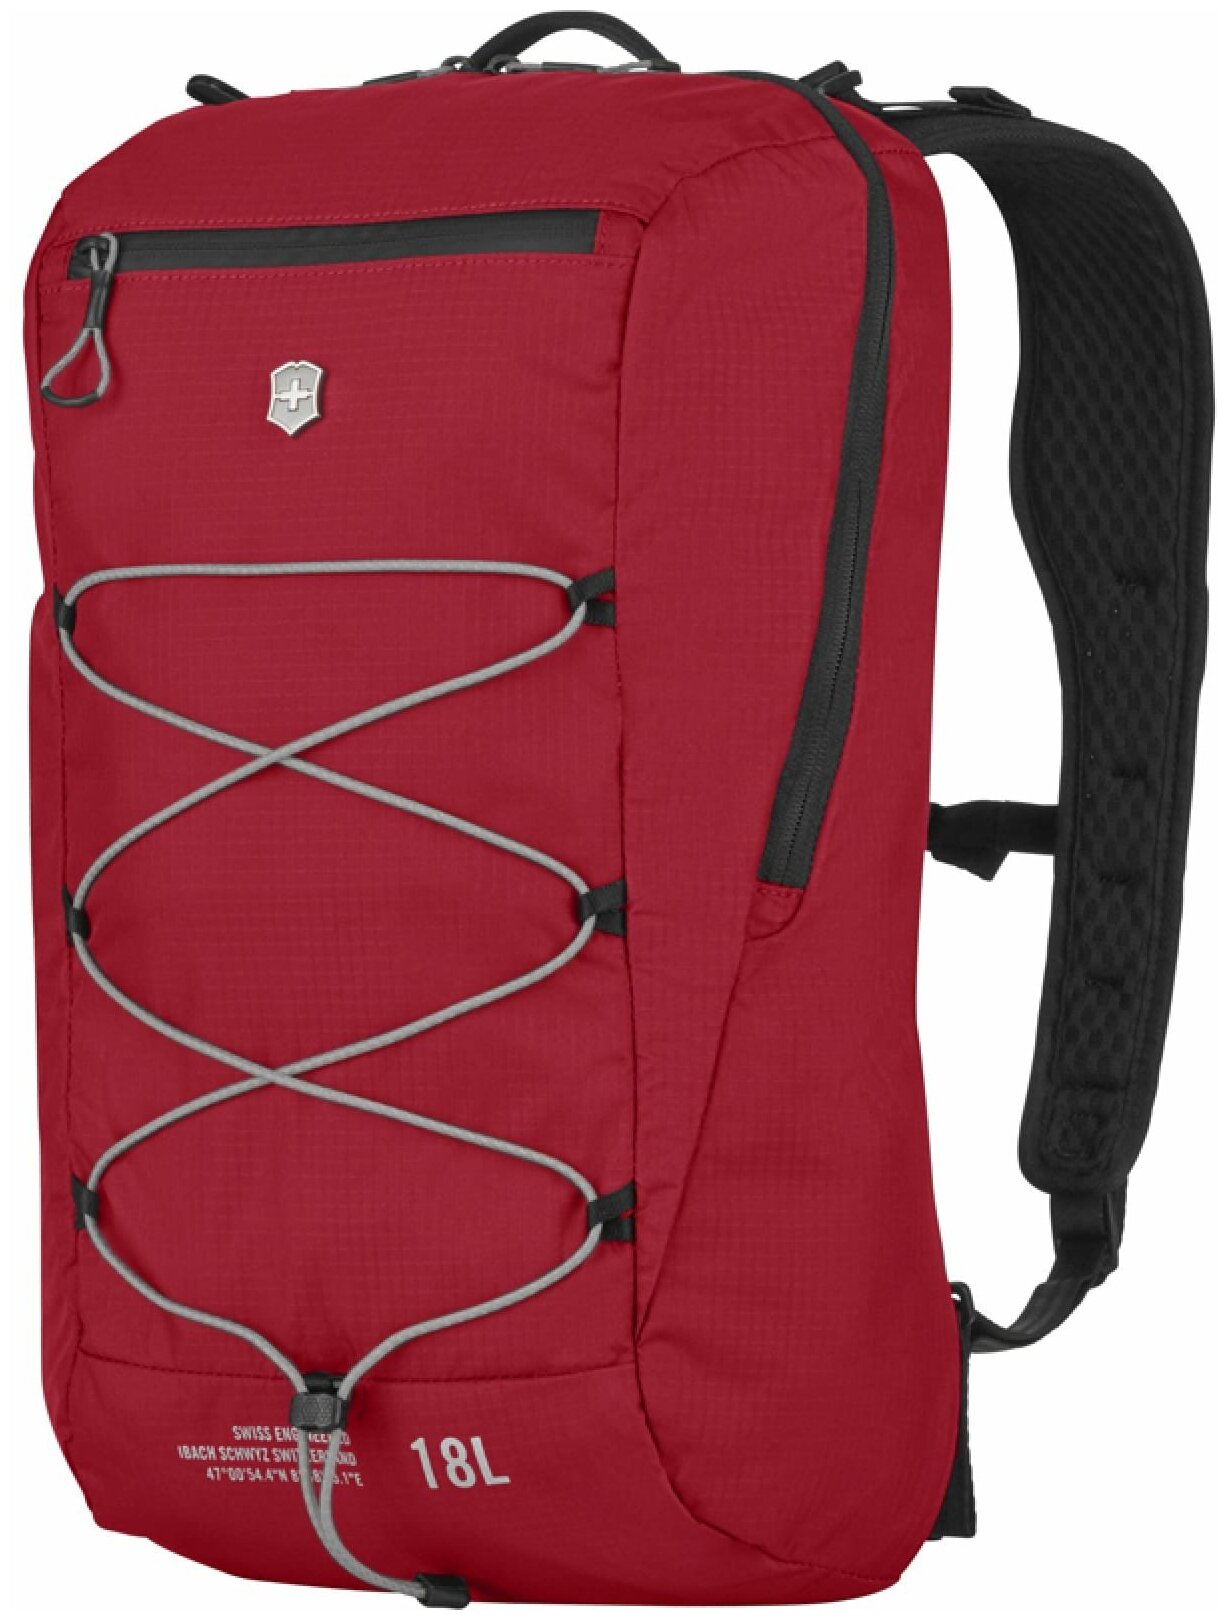 Рюкзак для активного отдыха VICTORINOX 606900 Compact Backpack красный 100% нейлон 28х17х44 см 18 л